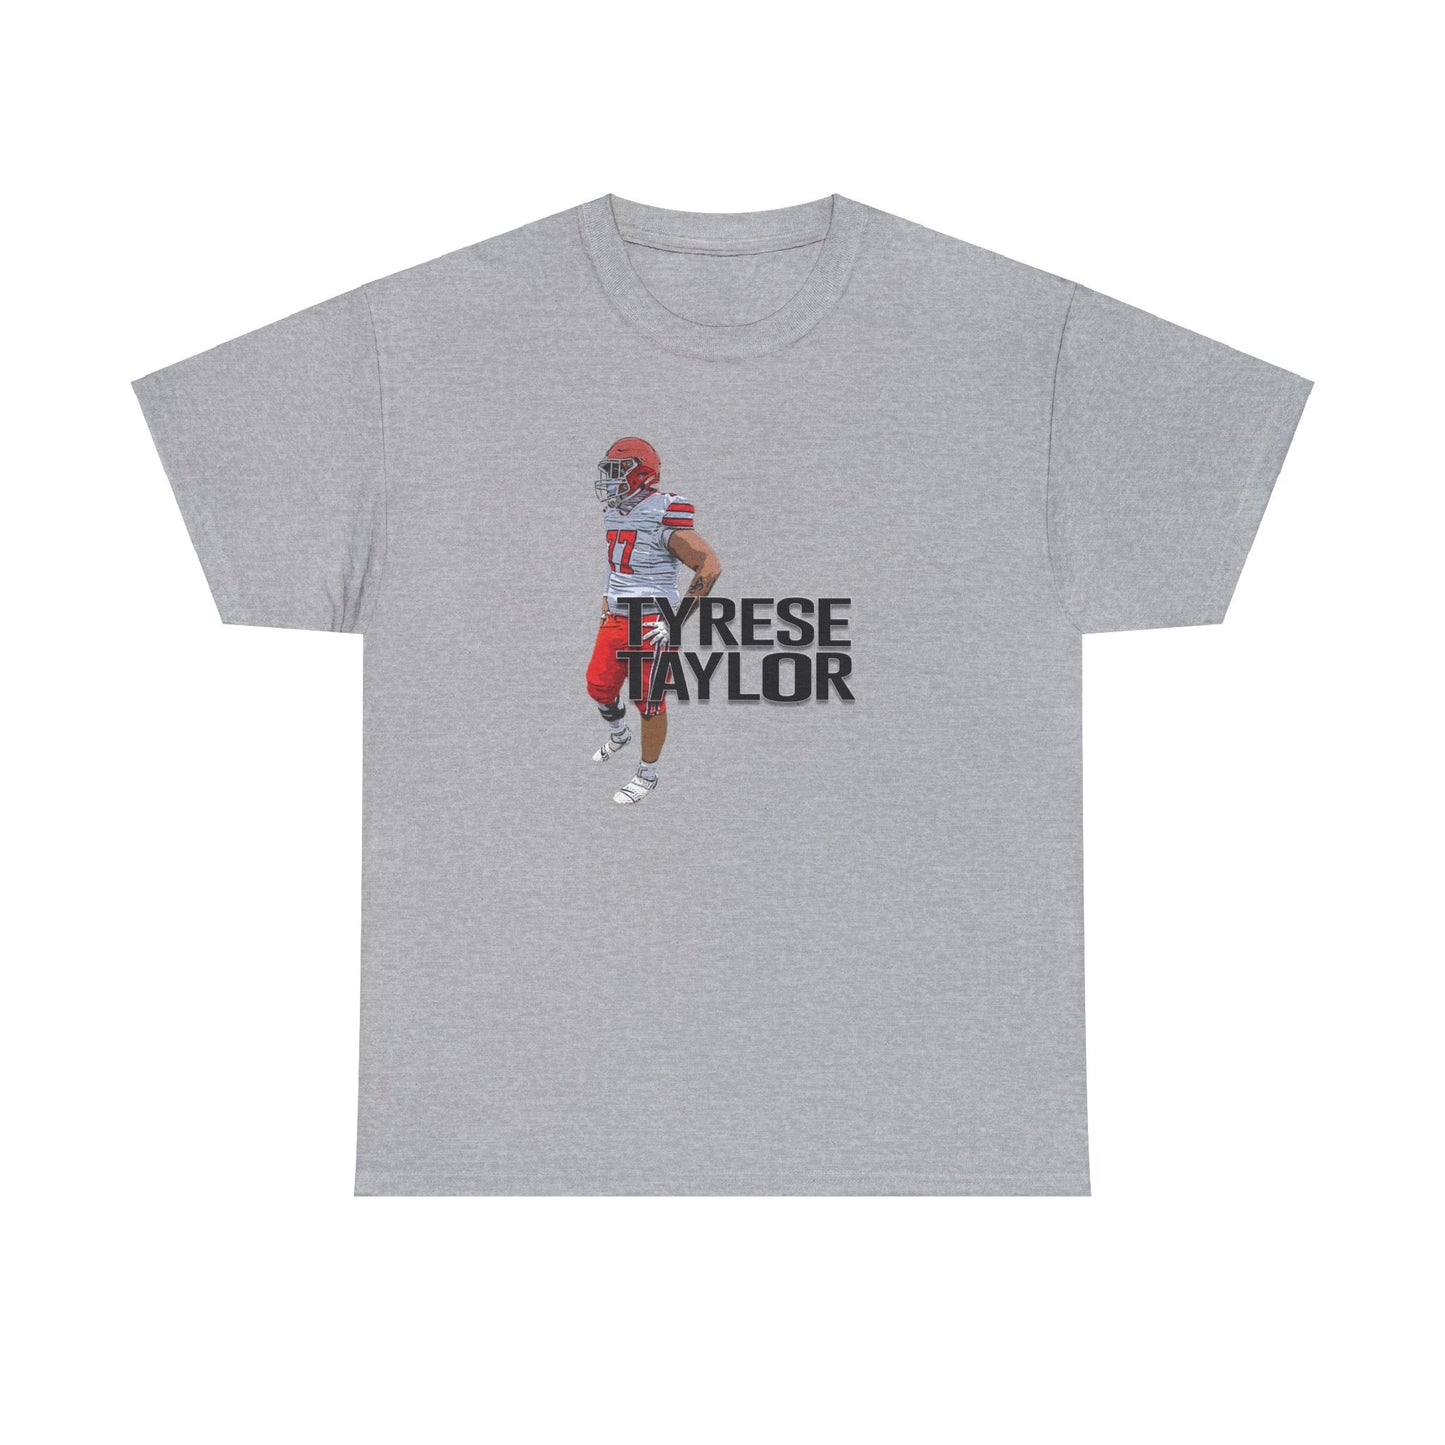 Tyrese Taylor: Essential Tee